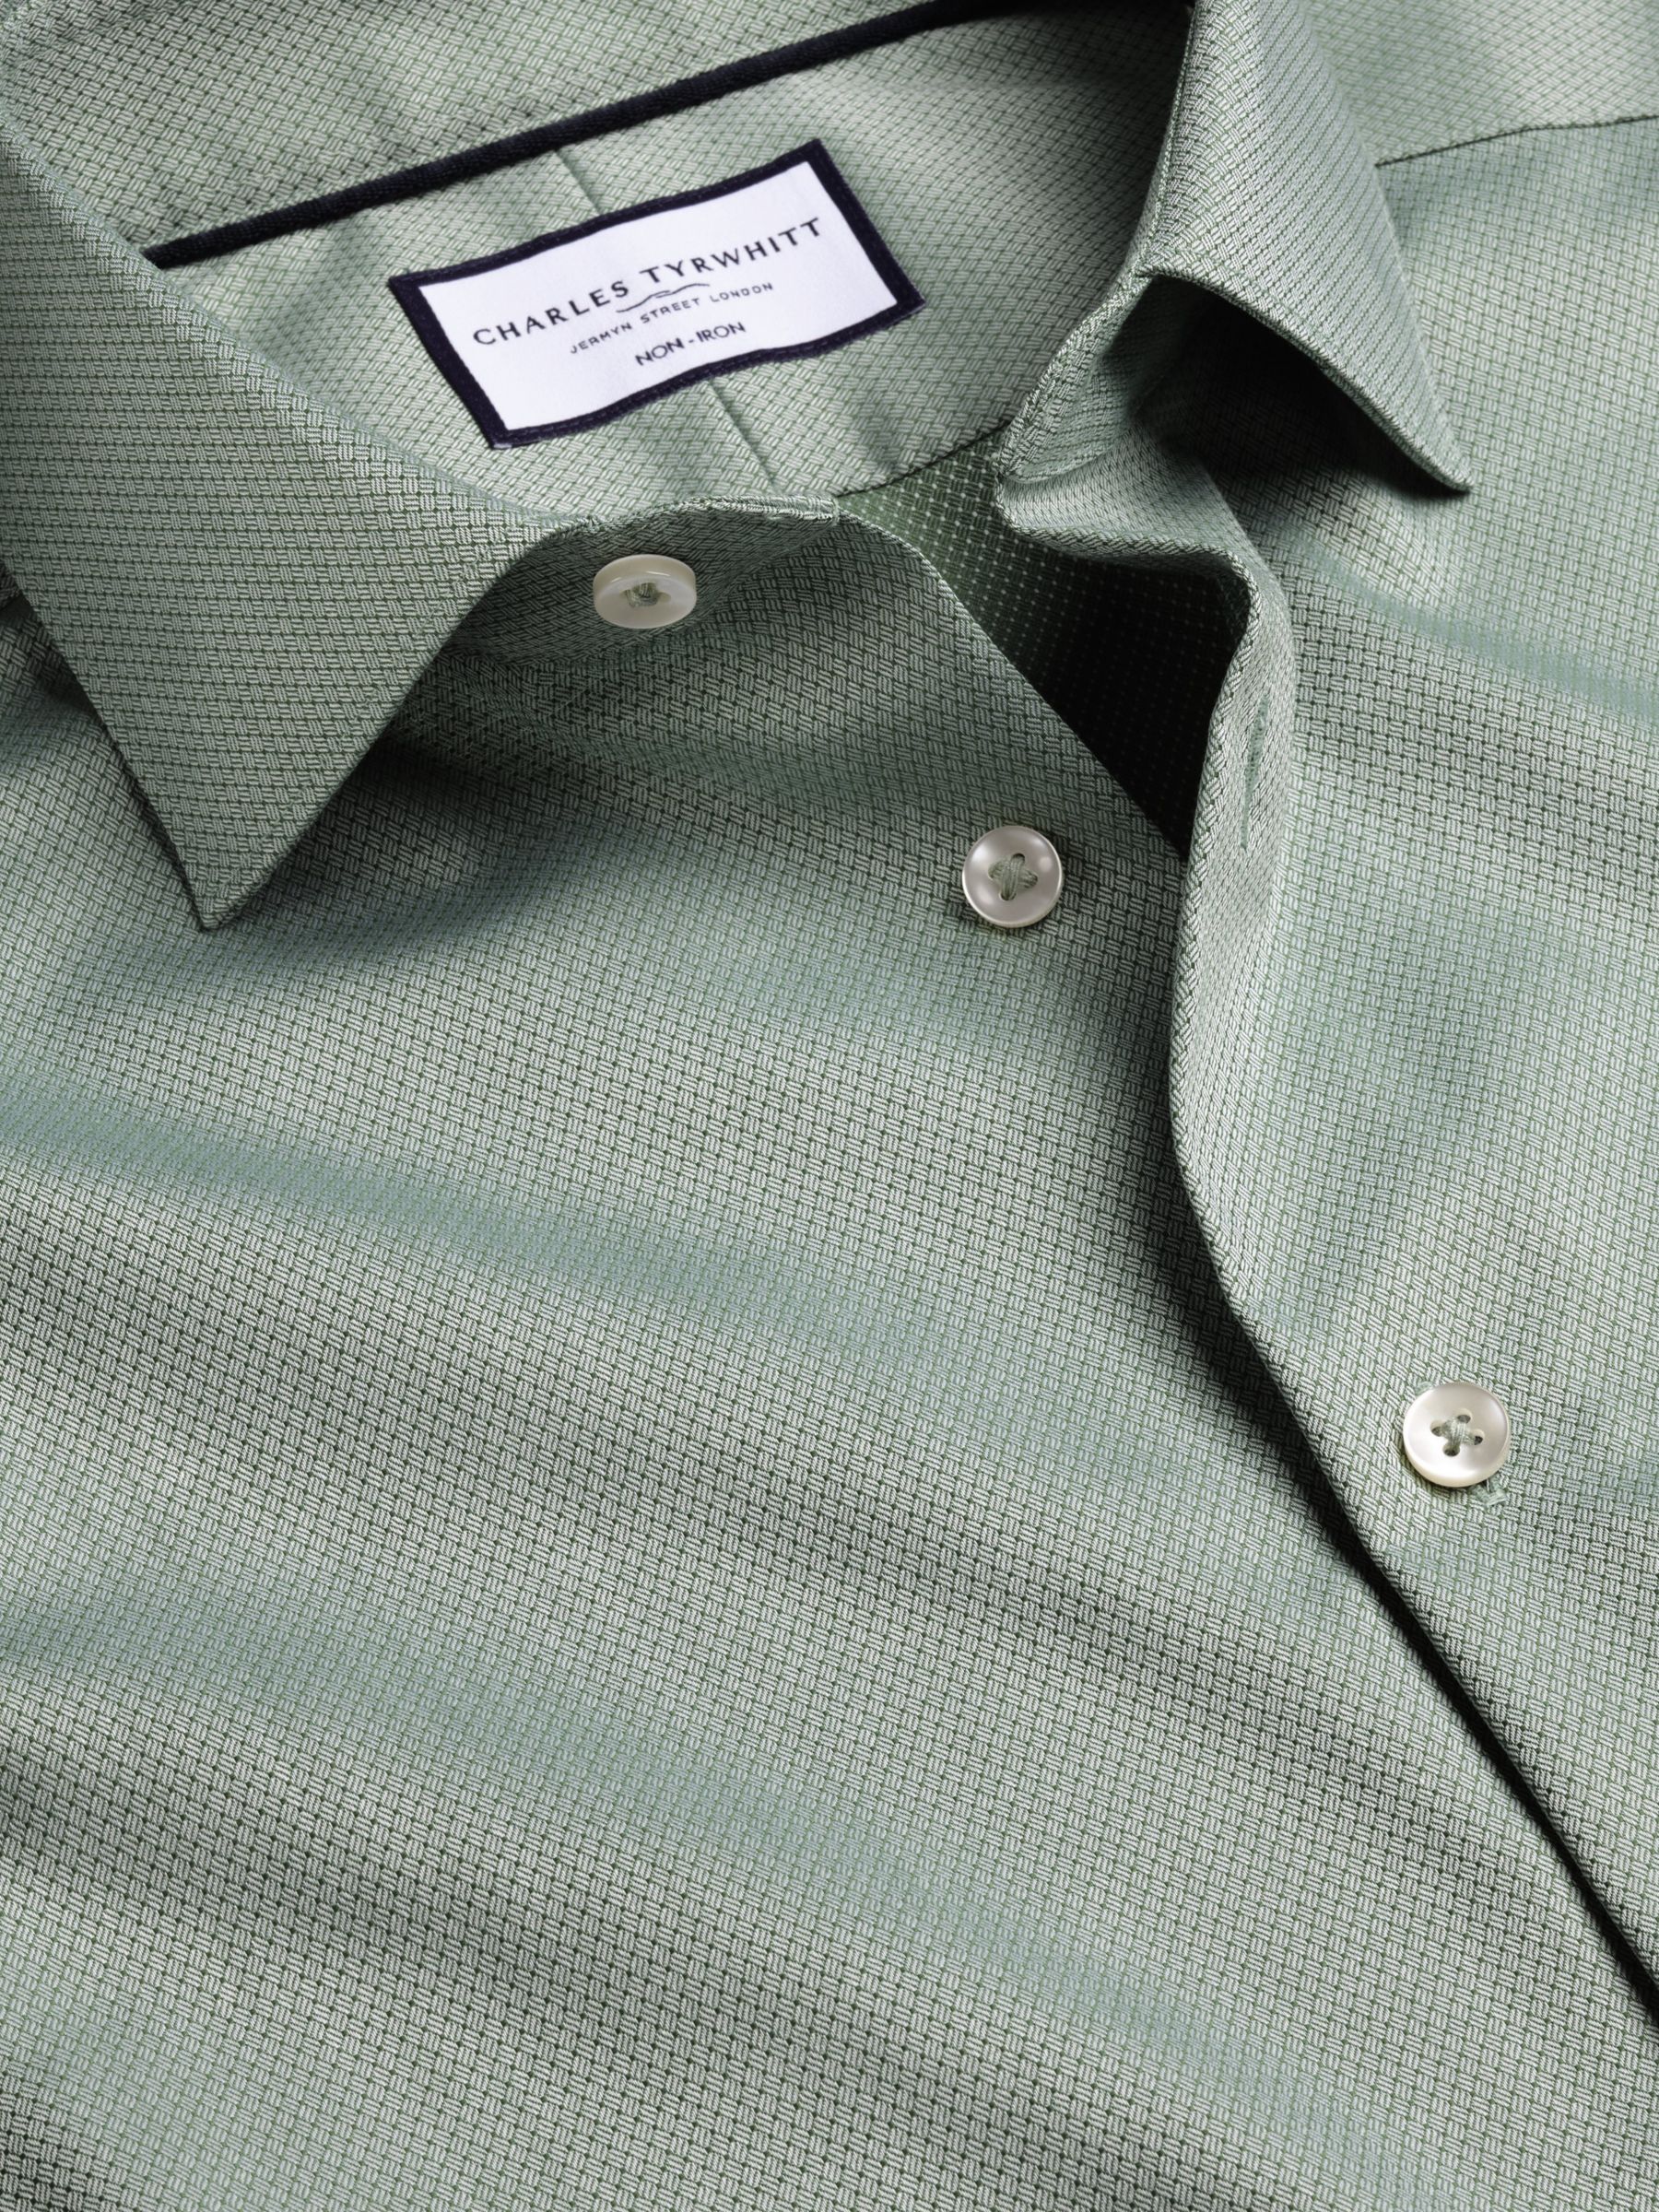 Buy Charles Tyrwhitt Non-Iron Stretch Semi Plain Textured Shirt Online at johnlewis.com